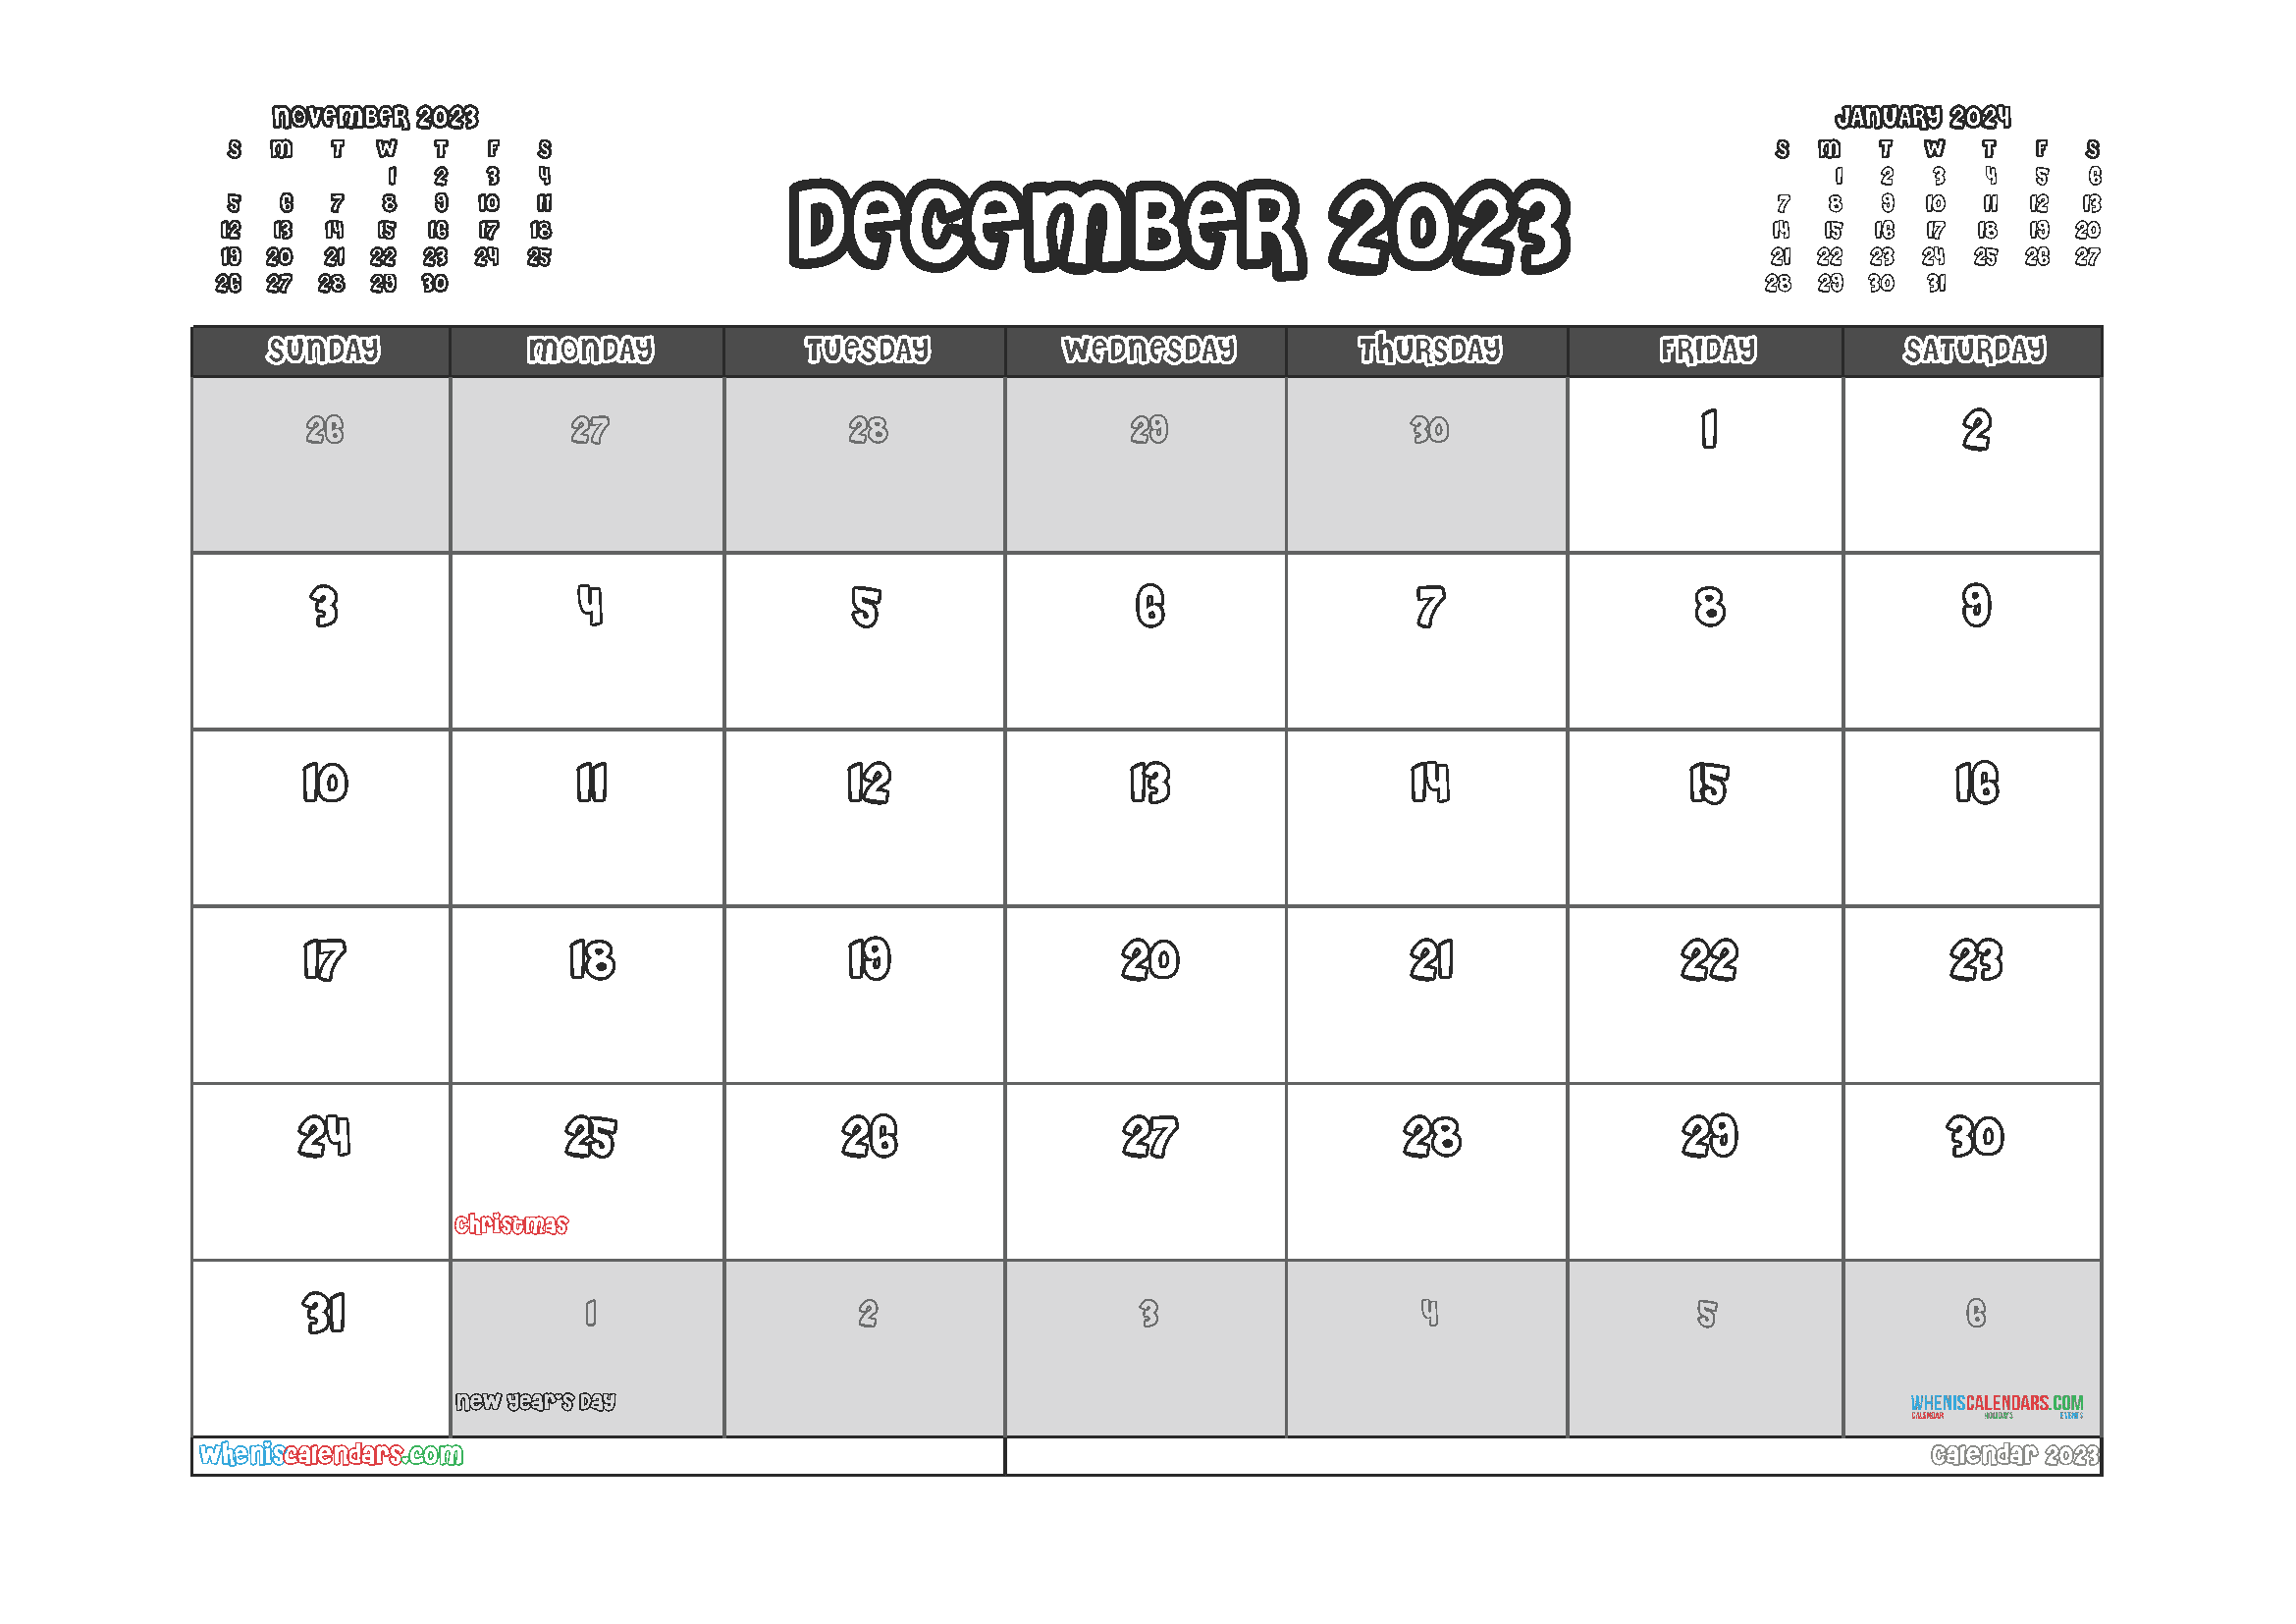 Free Printable Calendar 2023 December with Holidays PDF in Landscape